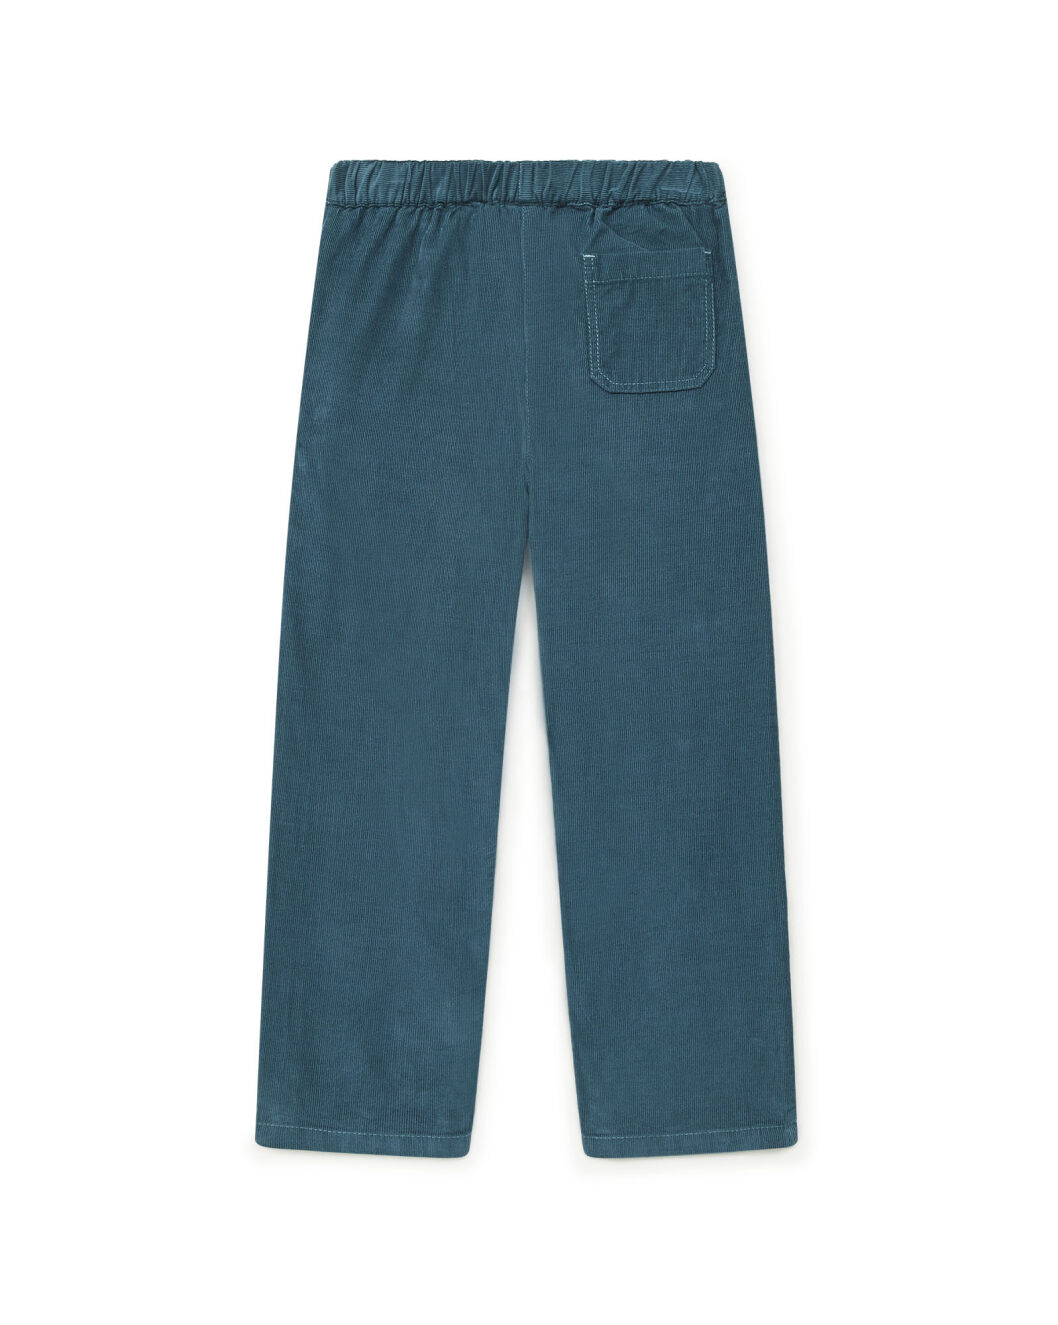 Blue Corduroy Pants w/ Pocket Embroidery- Bonton